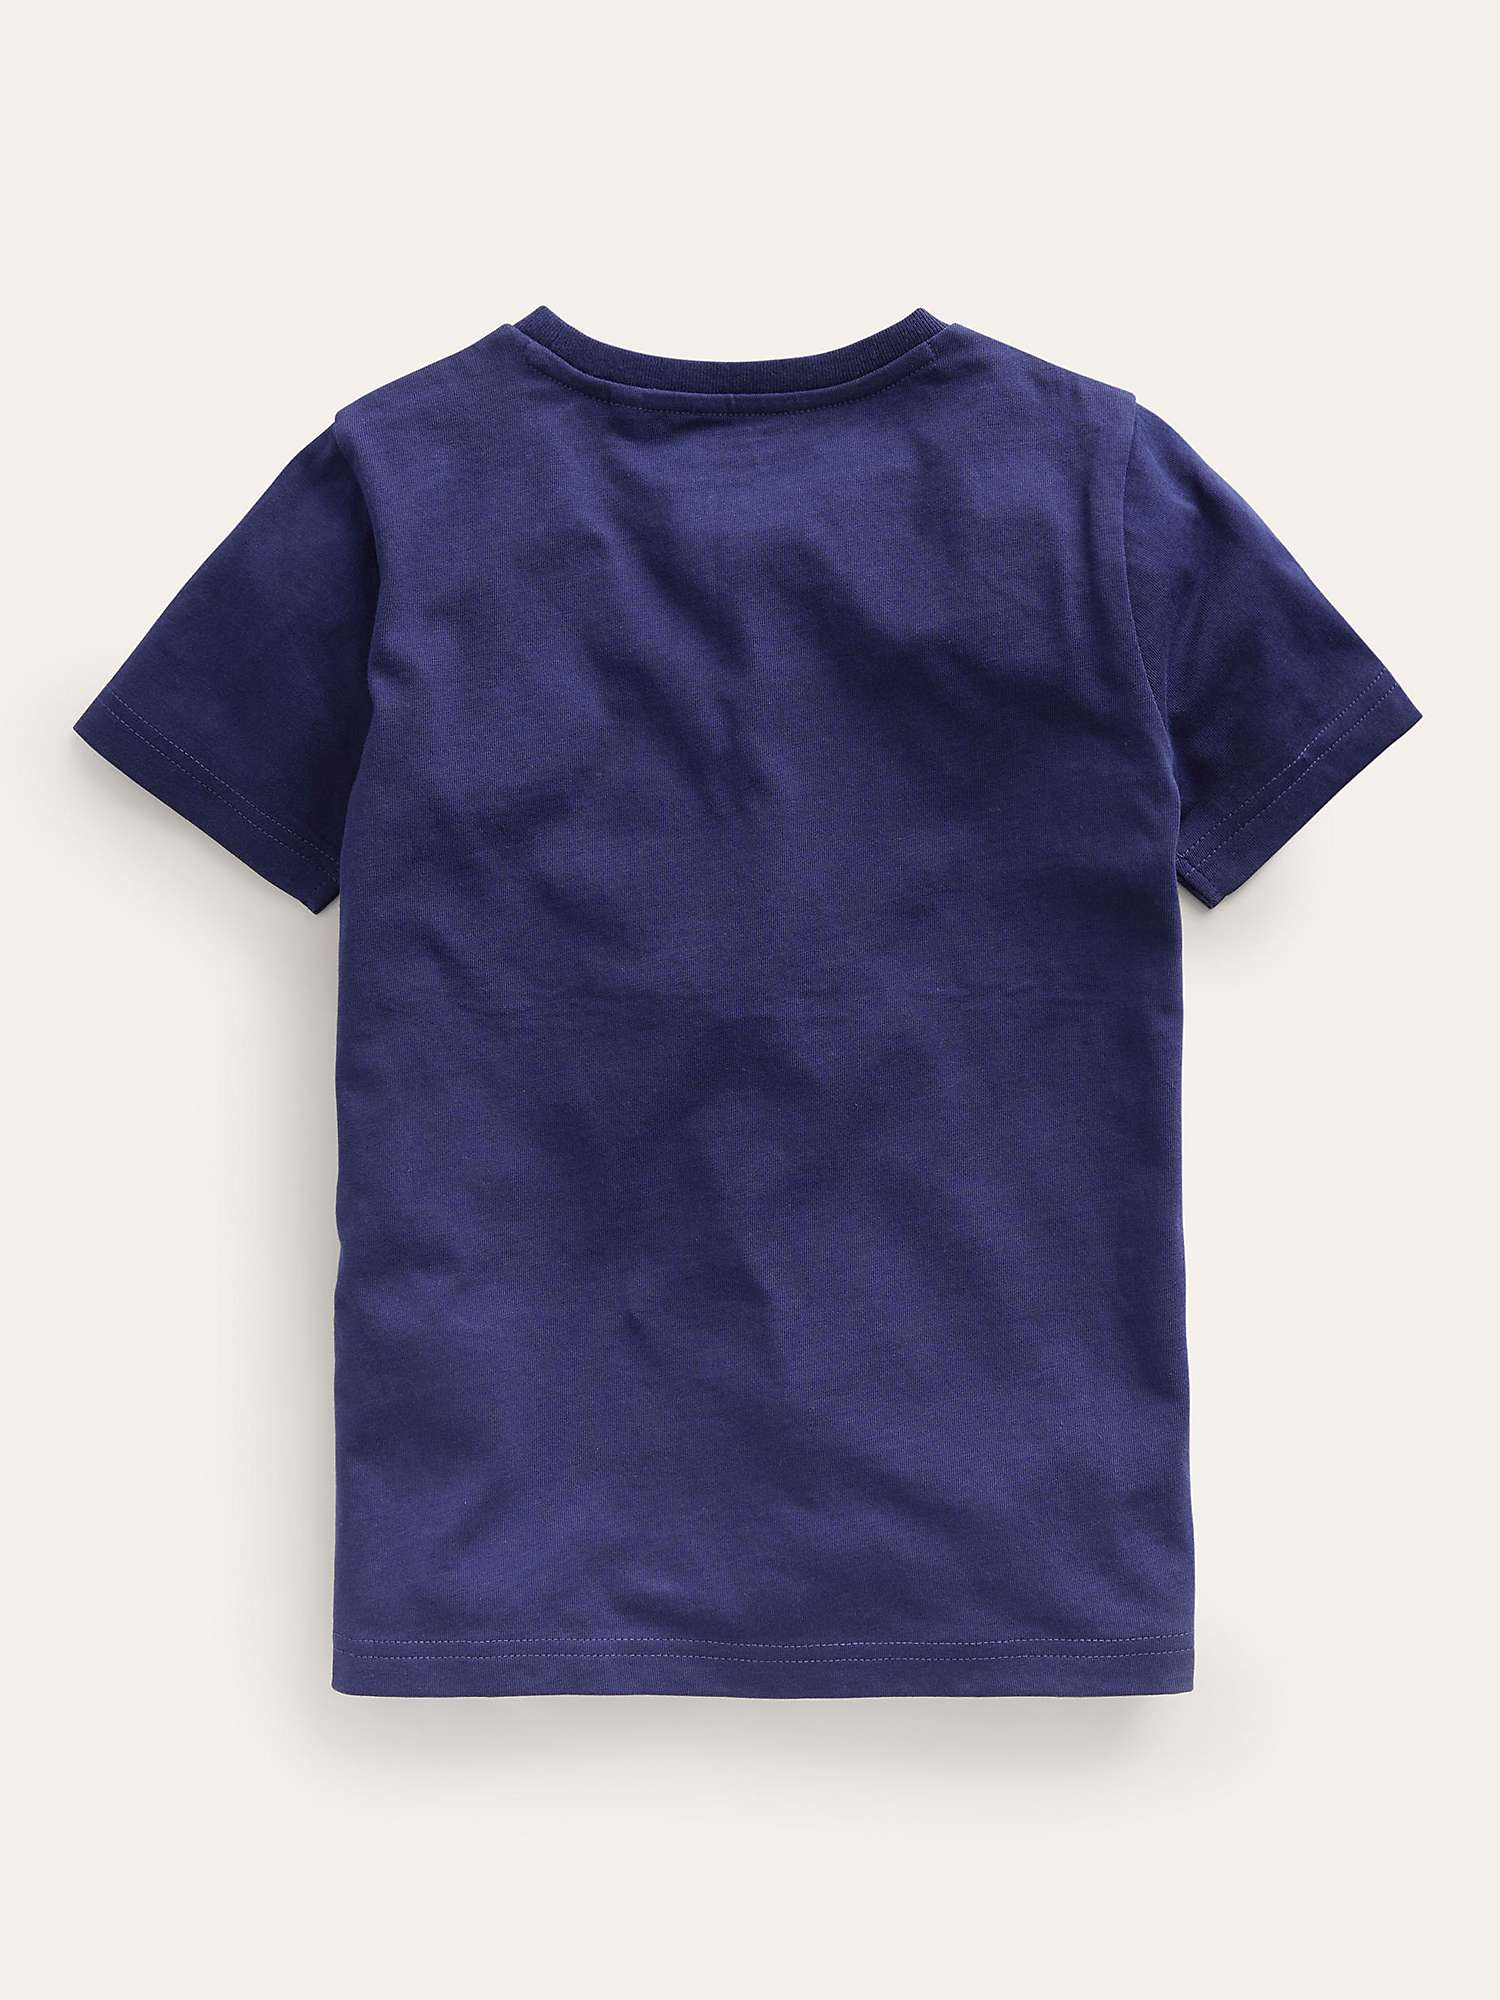 Buy Mini Boden Kids' Small Superstitch Dinosaur T-Shirt, College Navy Online at johnlewis.com